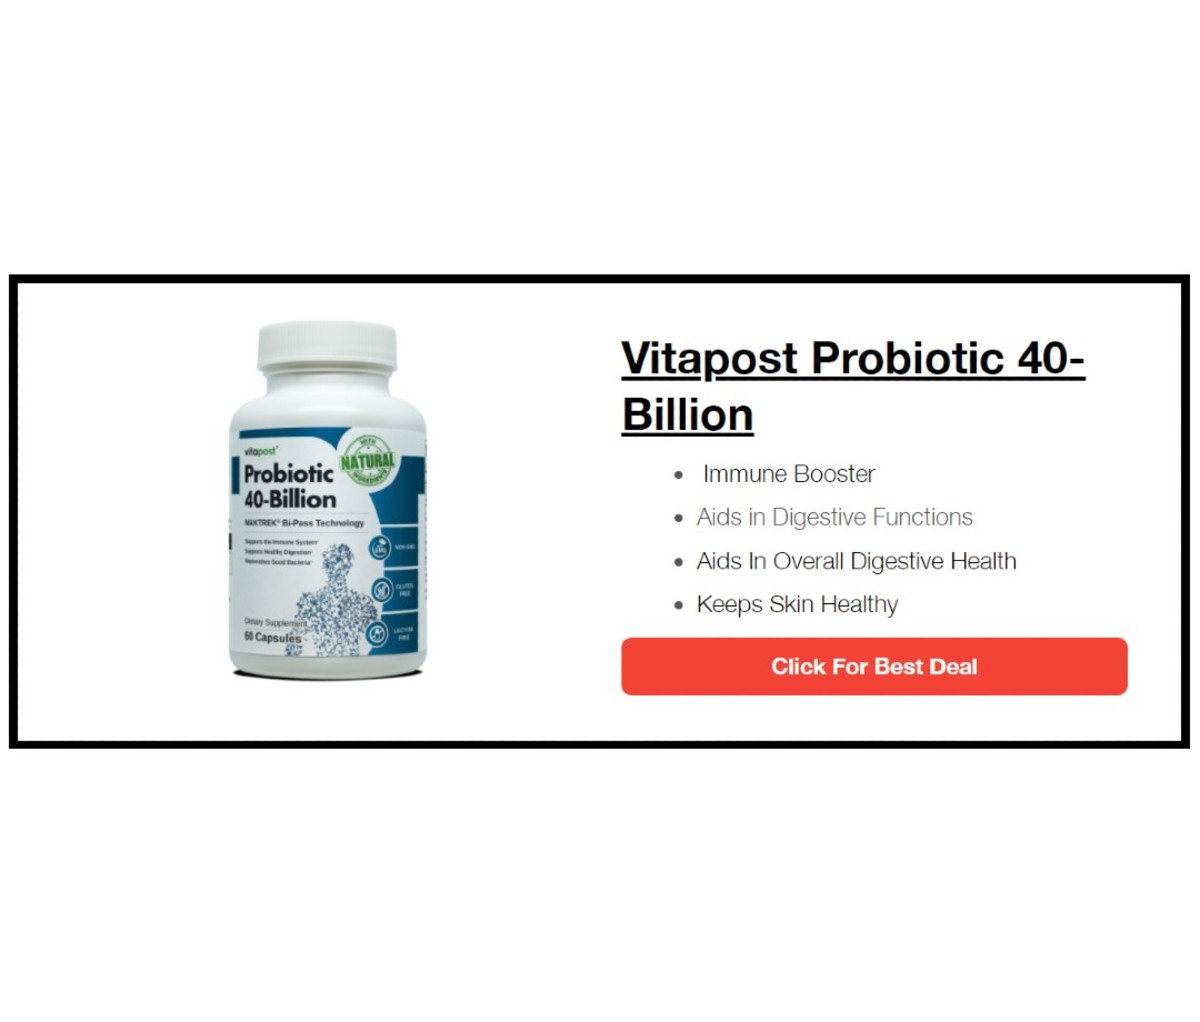 VitaPost Probiotic